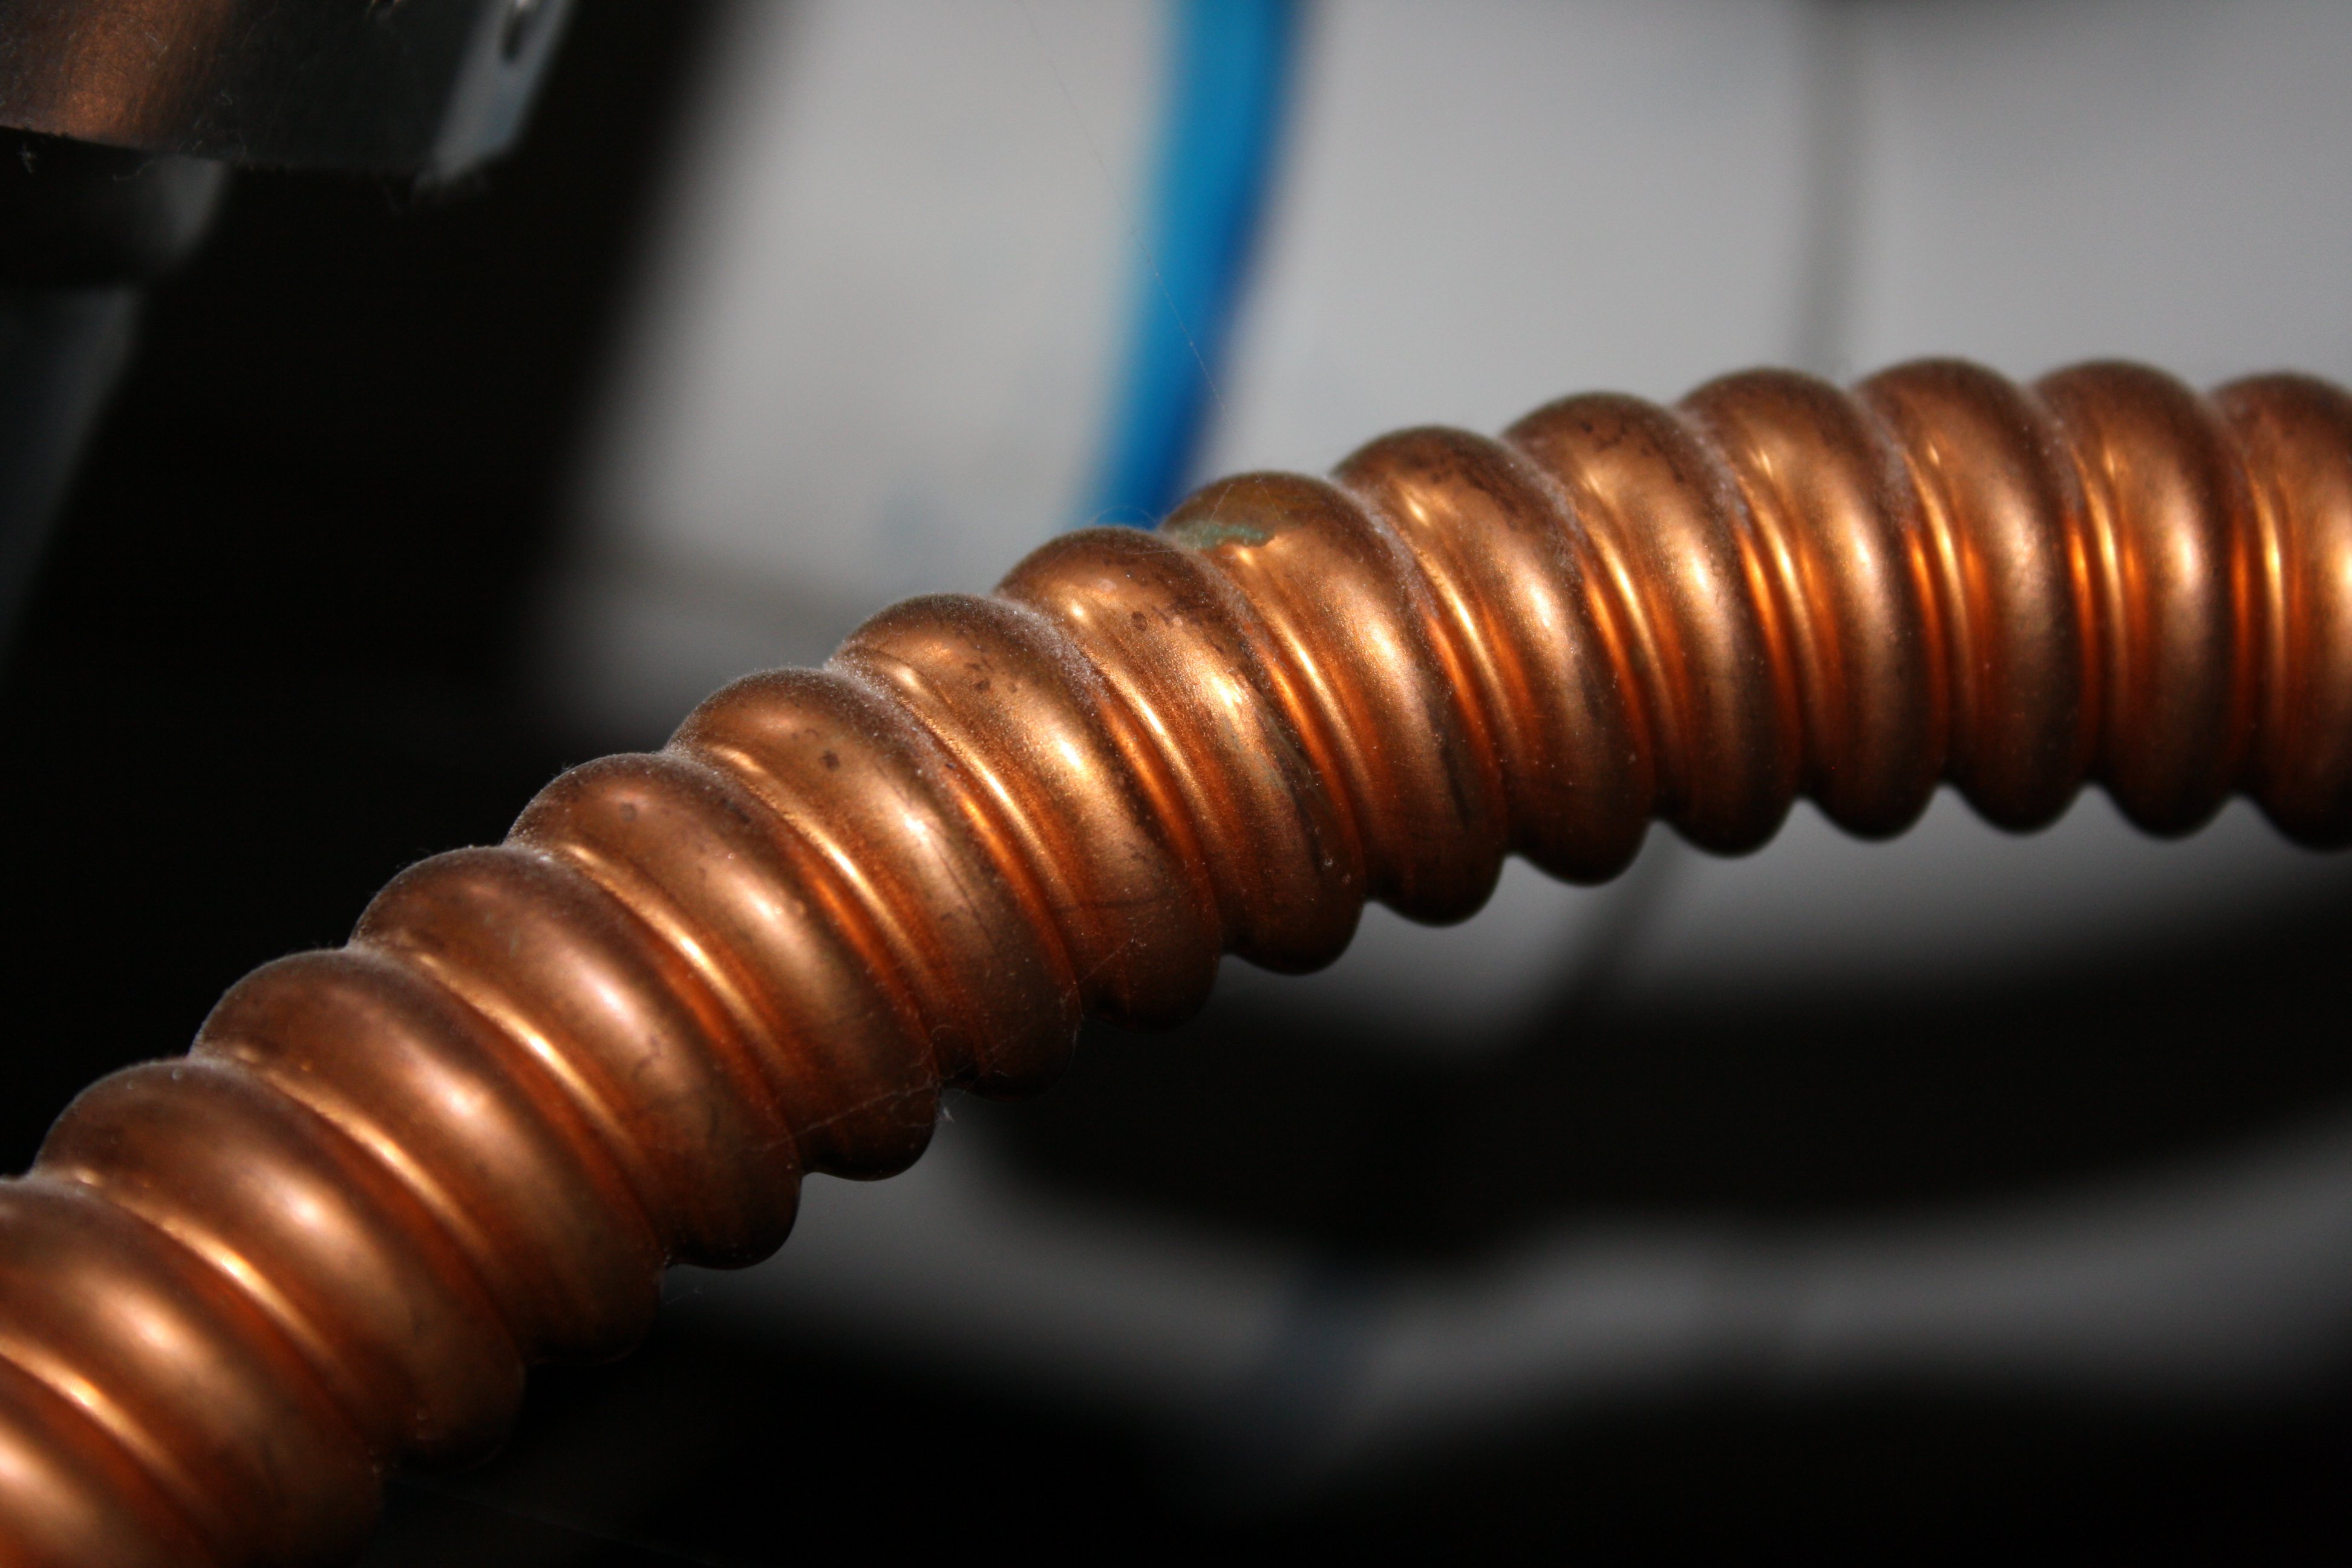 Flexible Copper Pipe Close Up Picture | Free Photograph | Photos Public